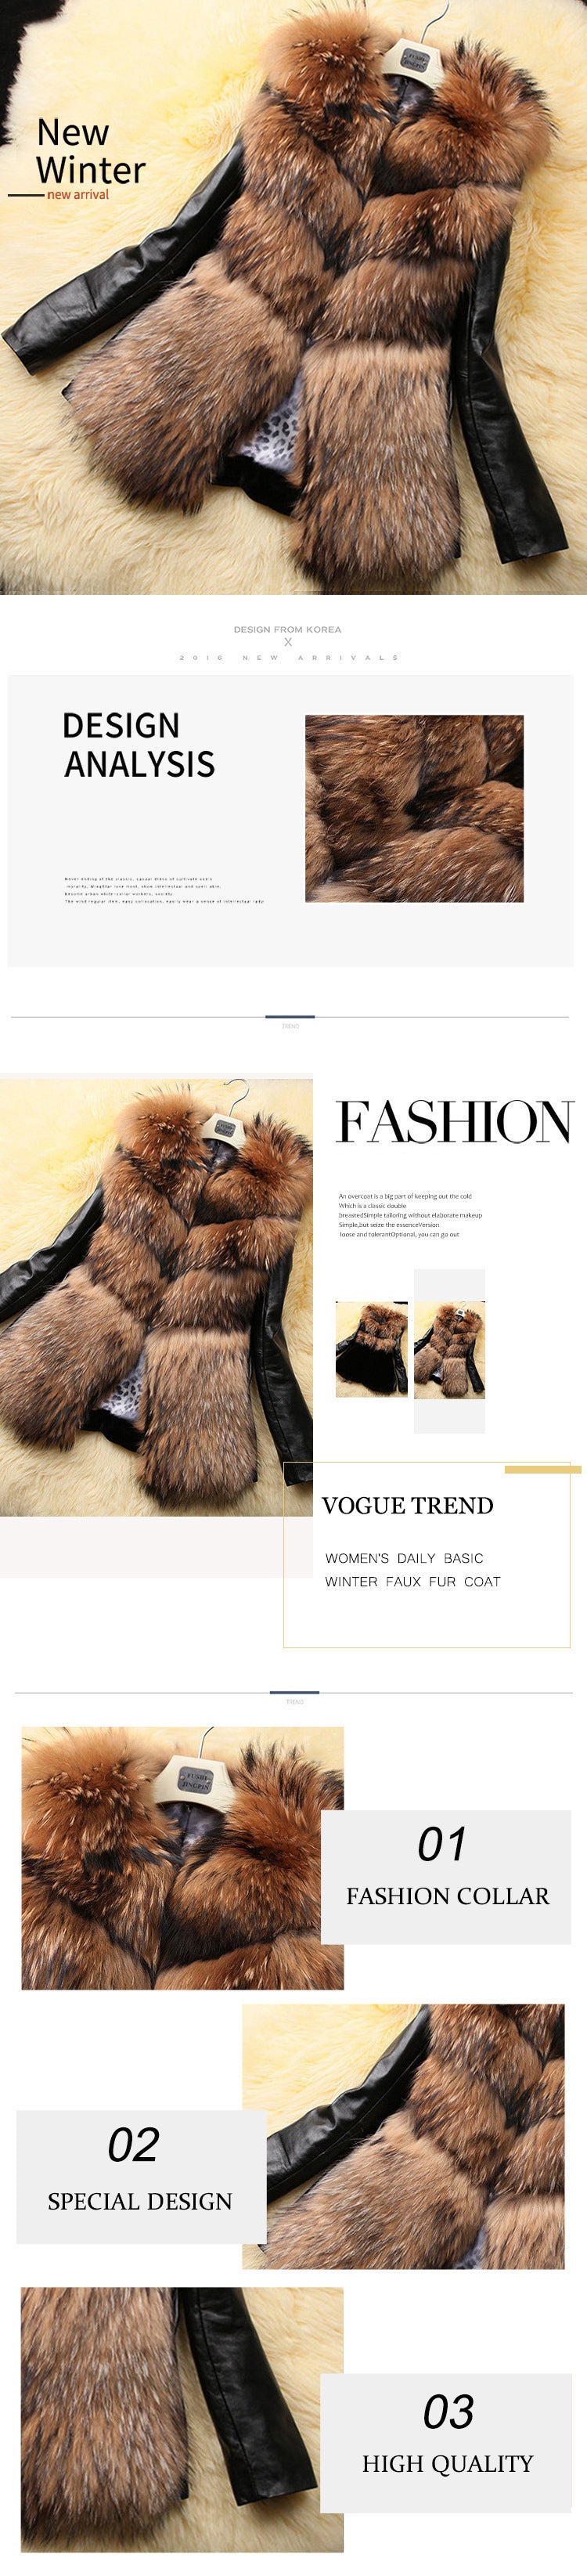 Women’s Daily Basic Winter Faux Fur Coat